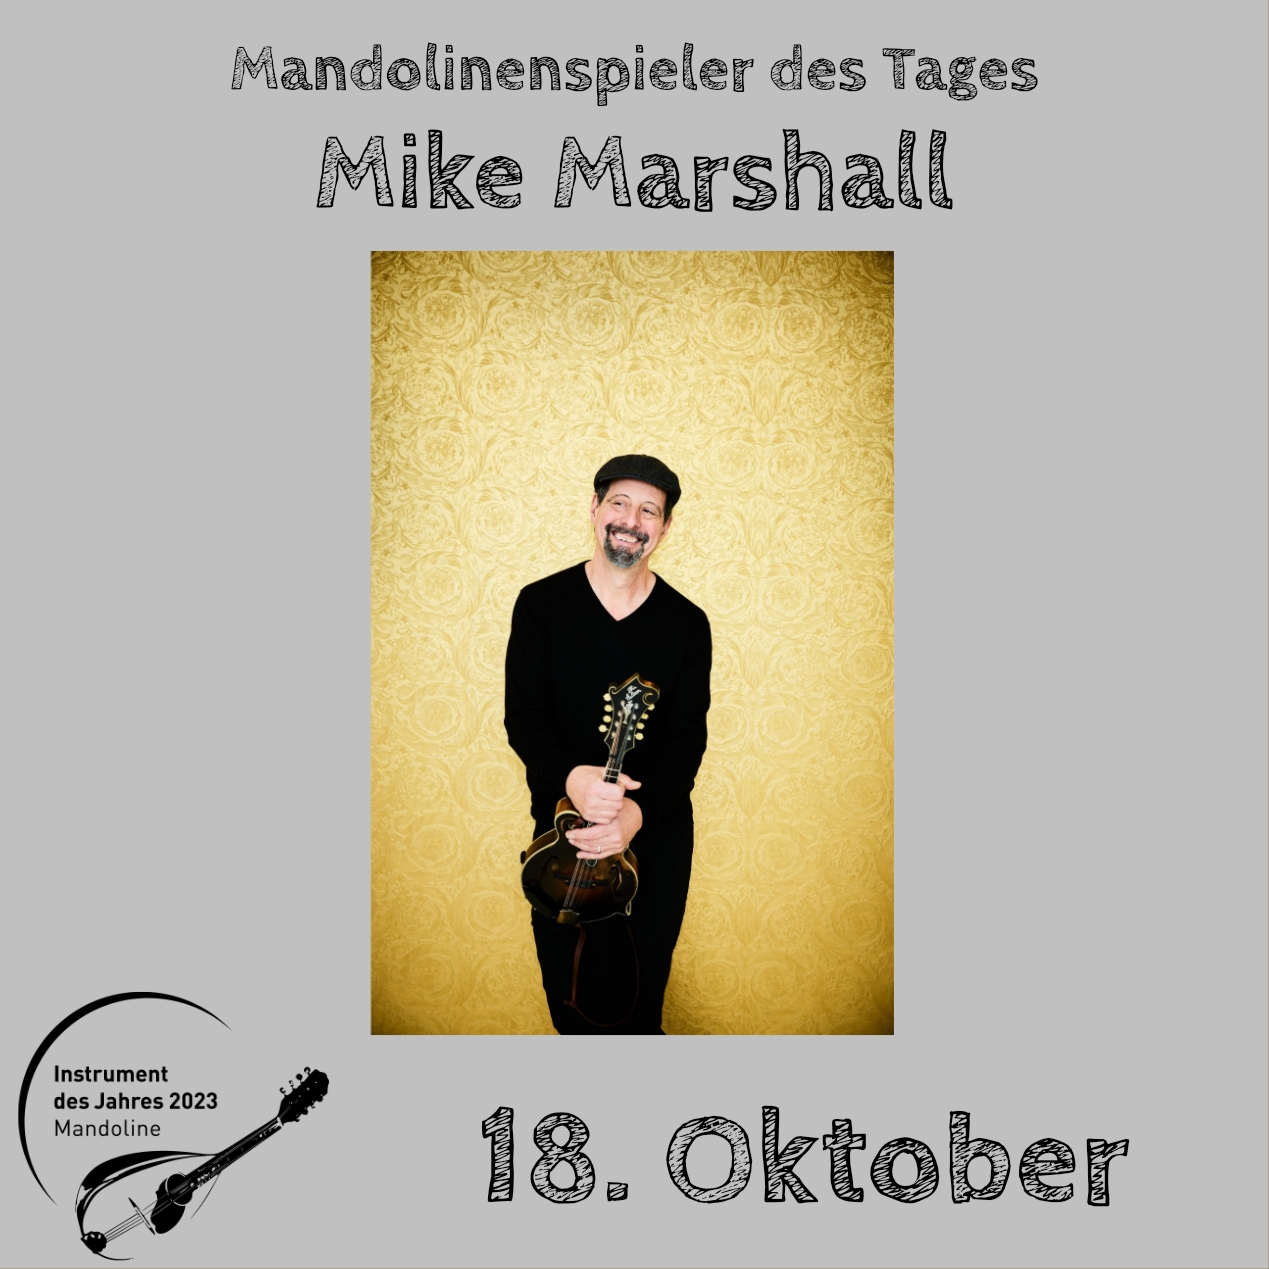 18. Oktober - Mike Marshall Instrument des Jahres 2023 Mandolinenspieler Mandolinenspielerin des Tages